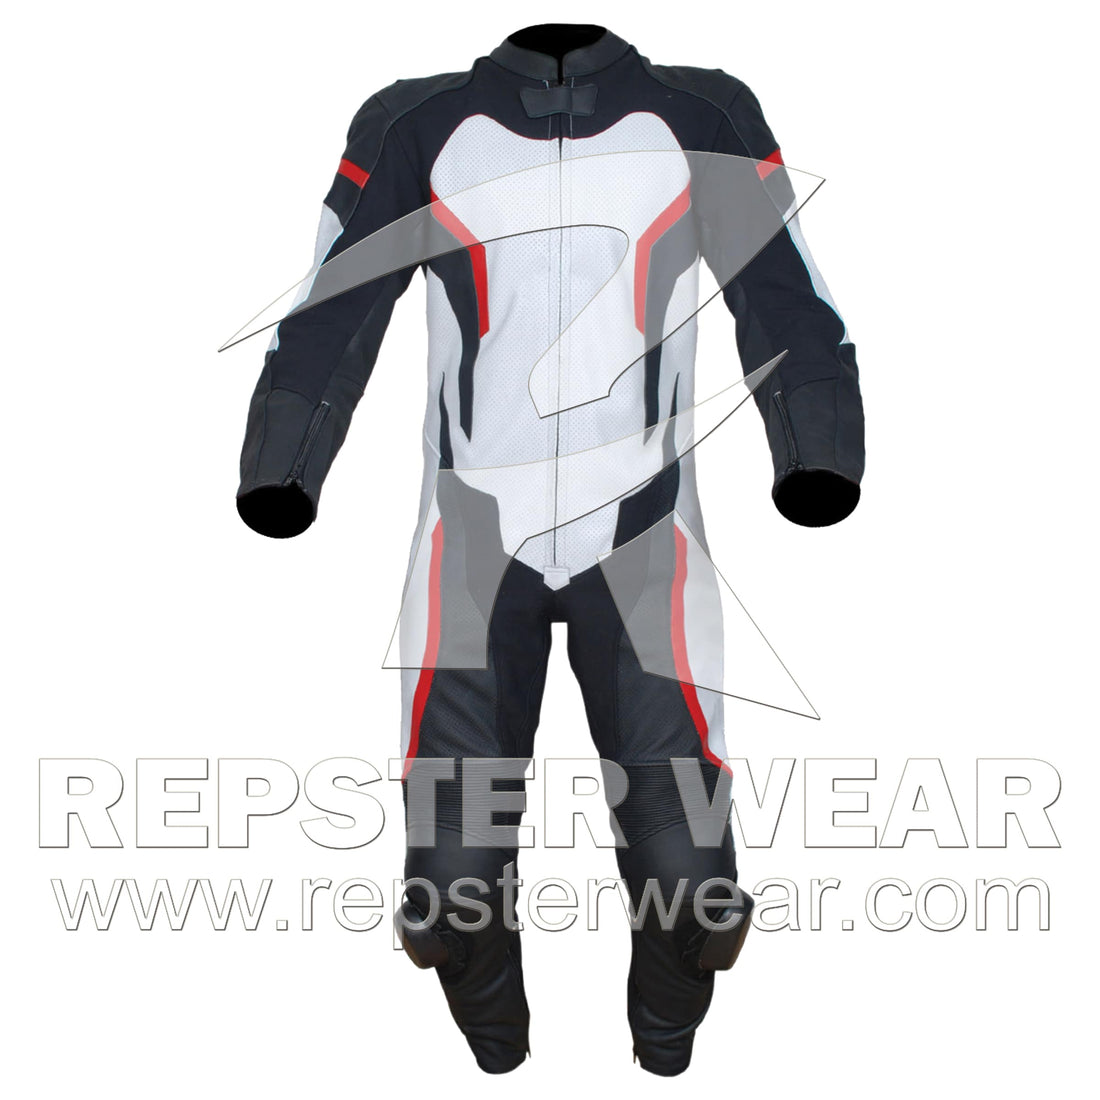 Alpinestar Motorbike Racing Leather Suit